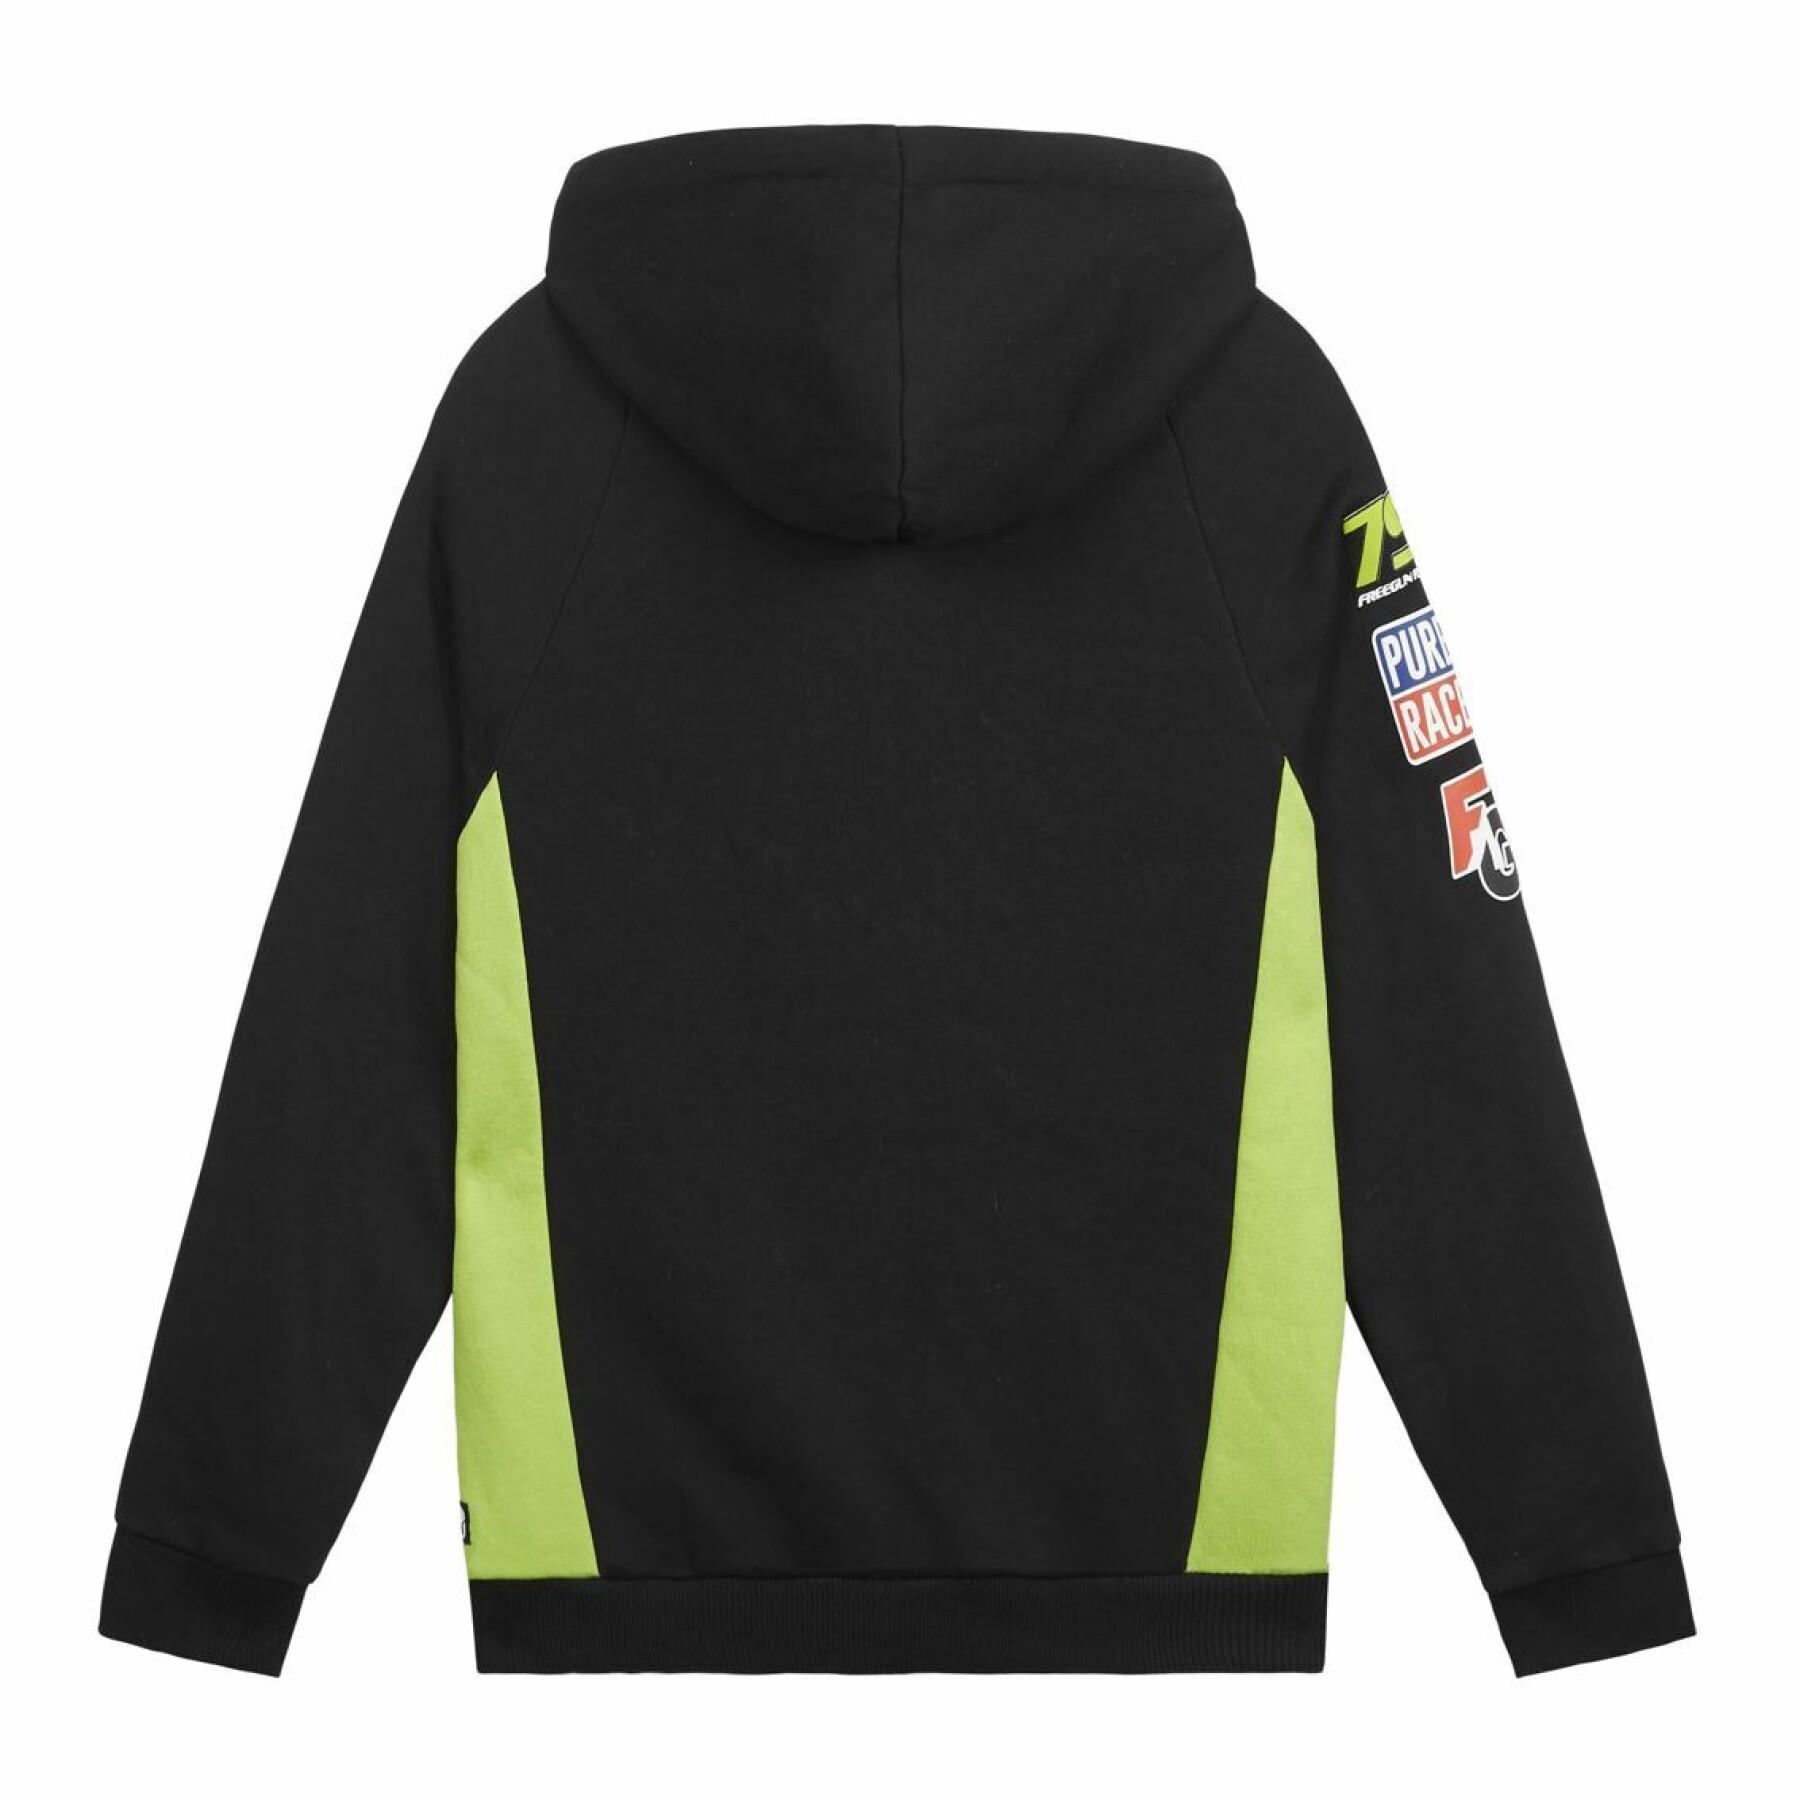 Sweatshirt à capuche enfant Freegun Racing